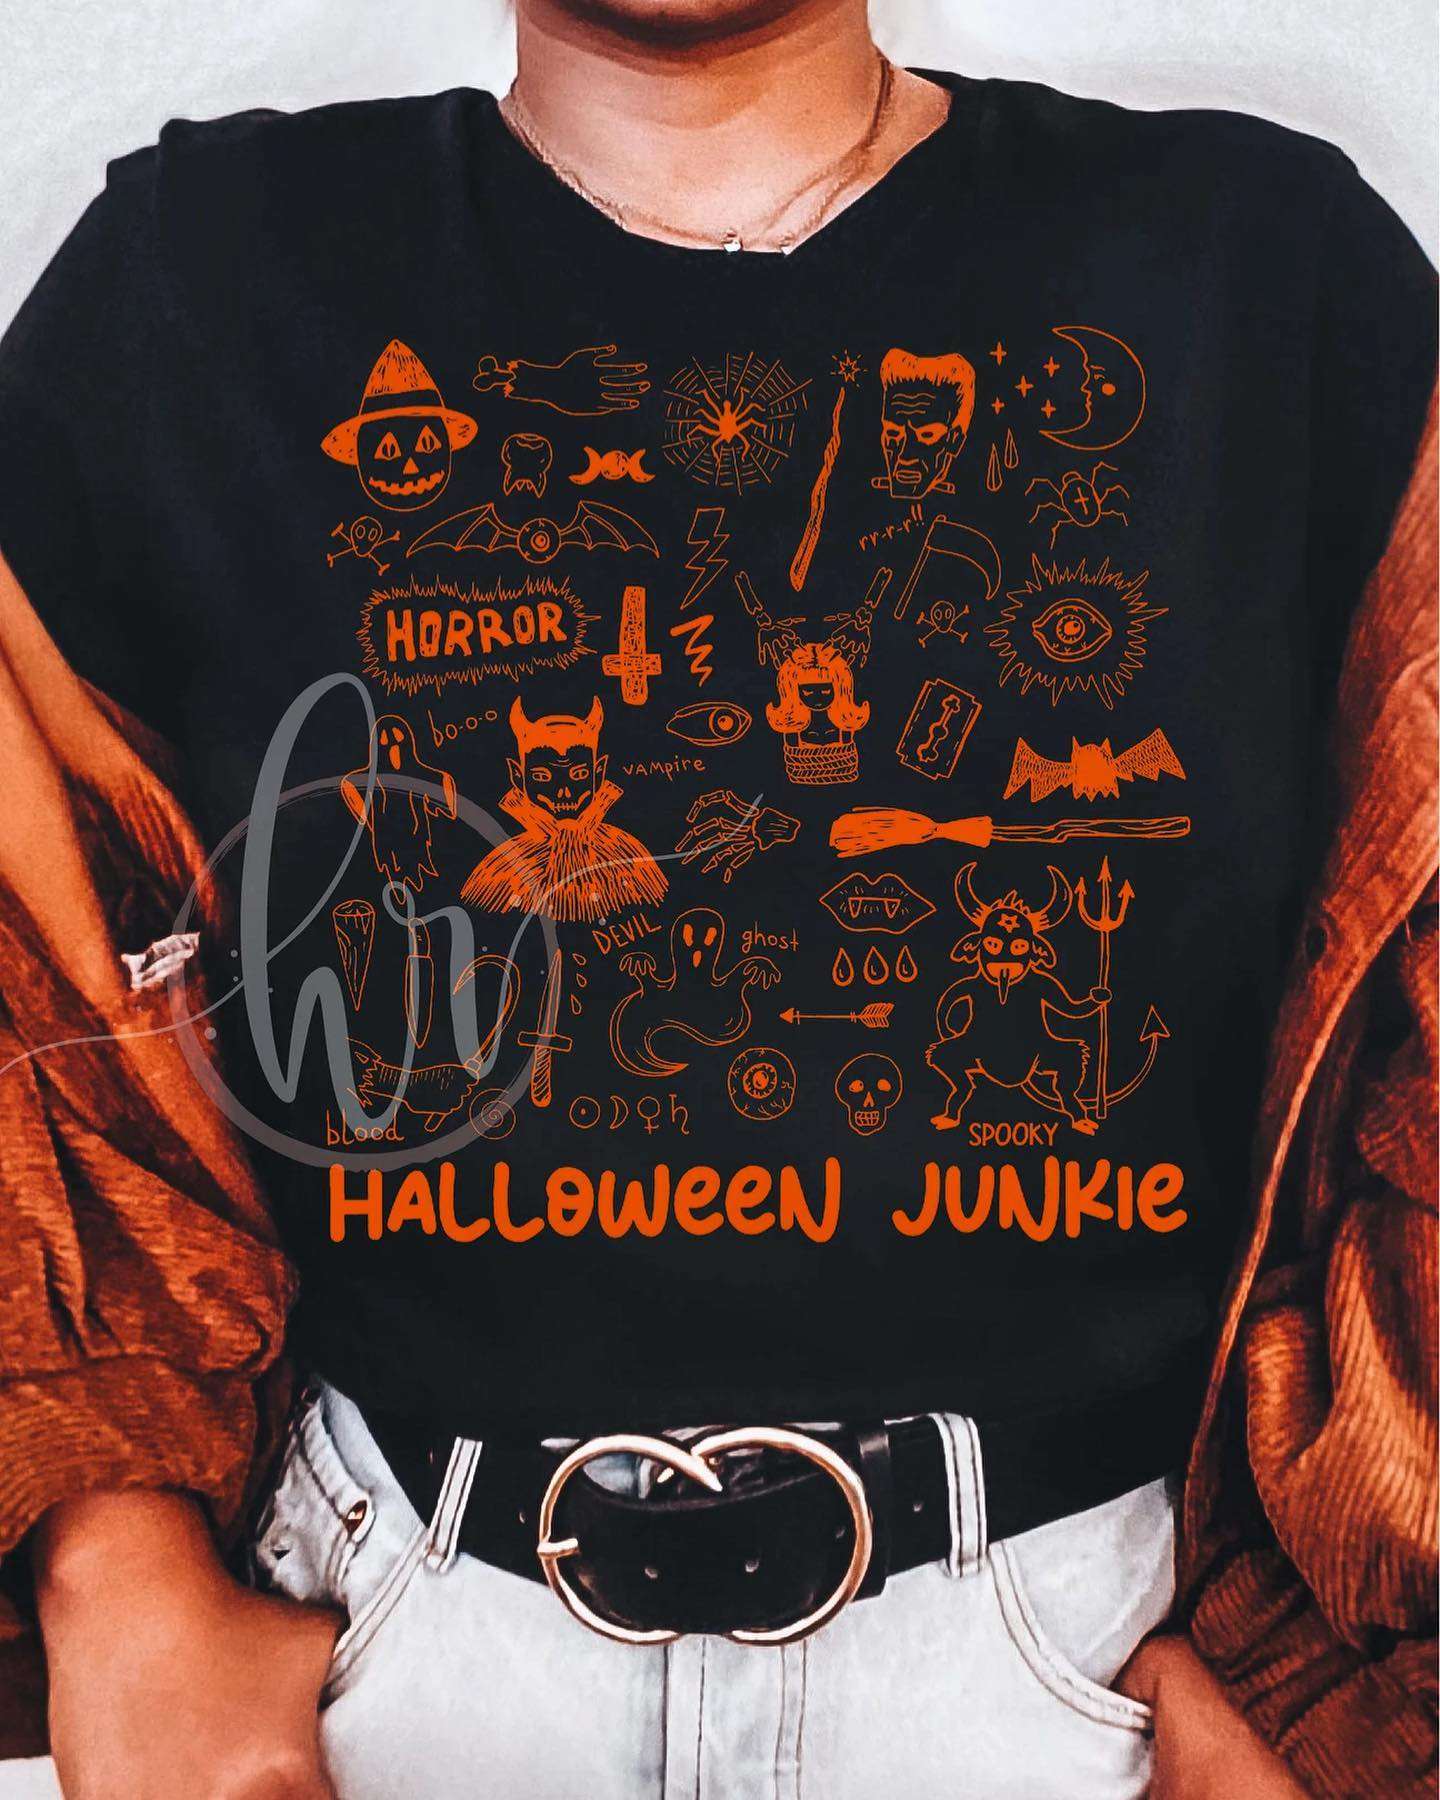 Halloween Junkie - Scary T-shirt for Halloween, Halloween spooky vibes